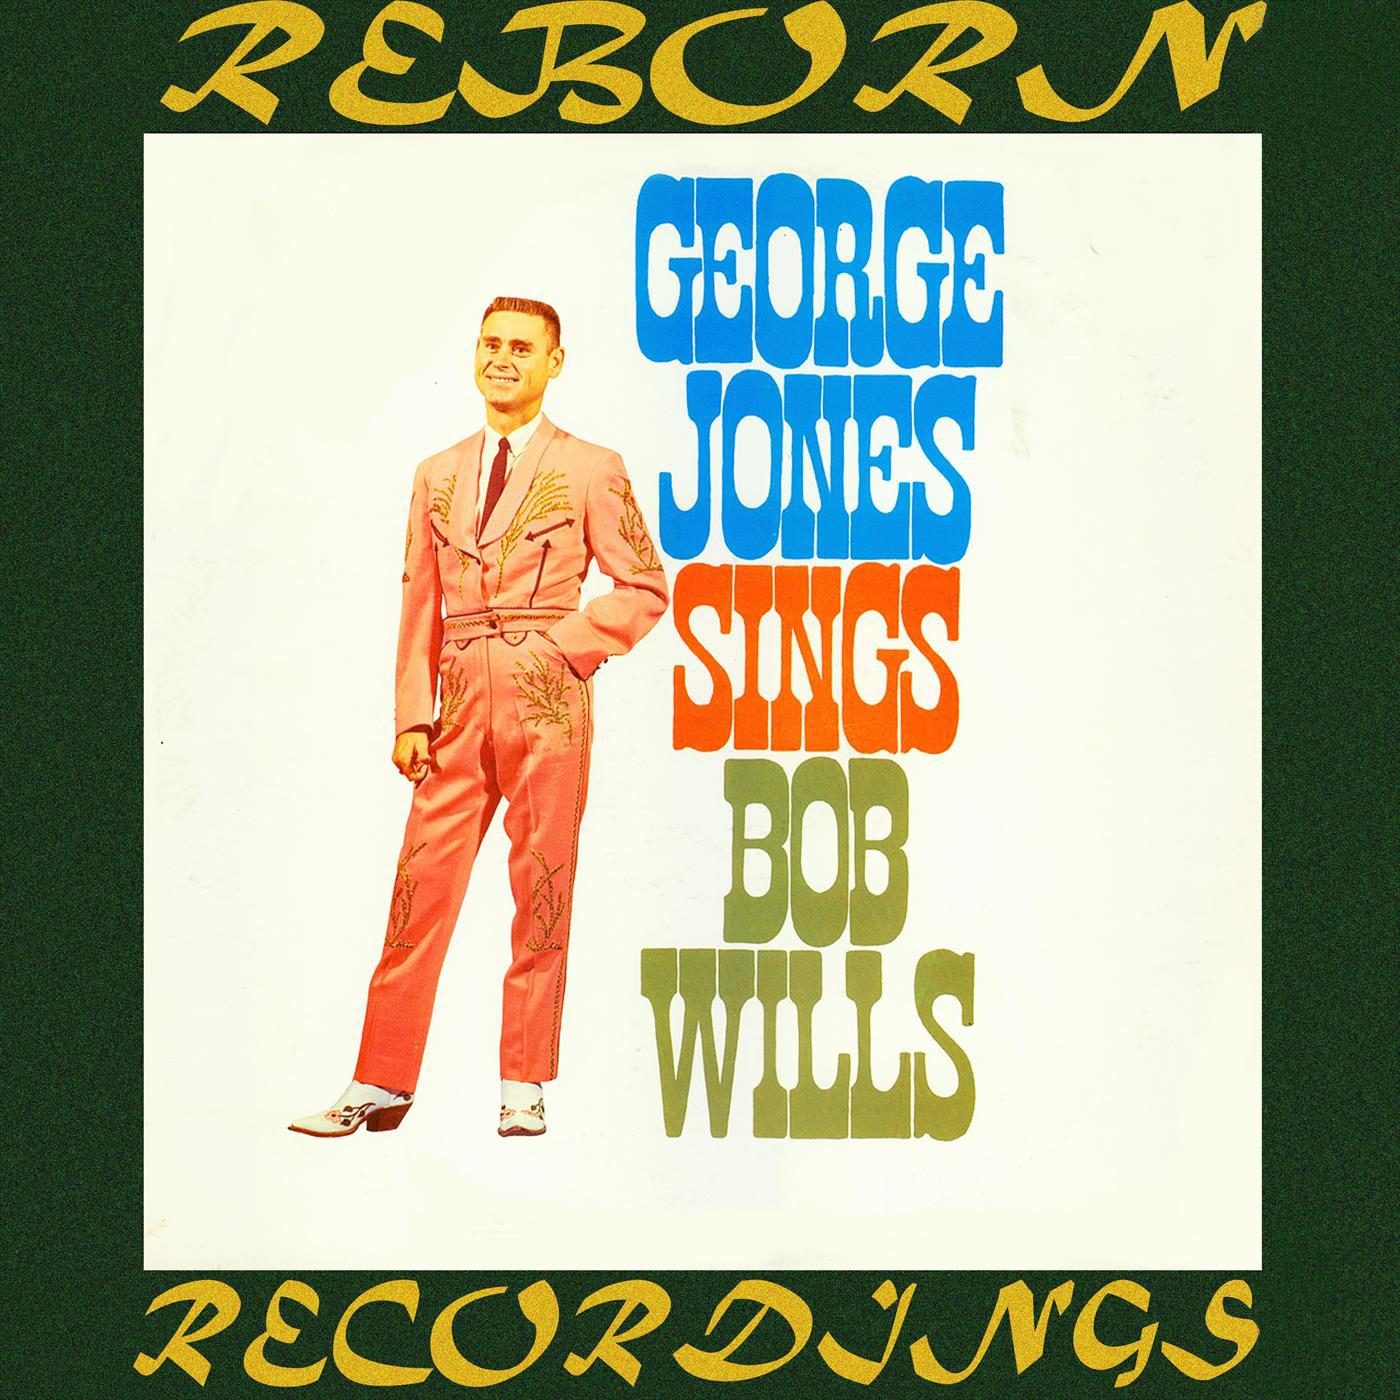 George Jones Sings Bob Wills (HD Remastered)